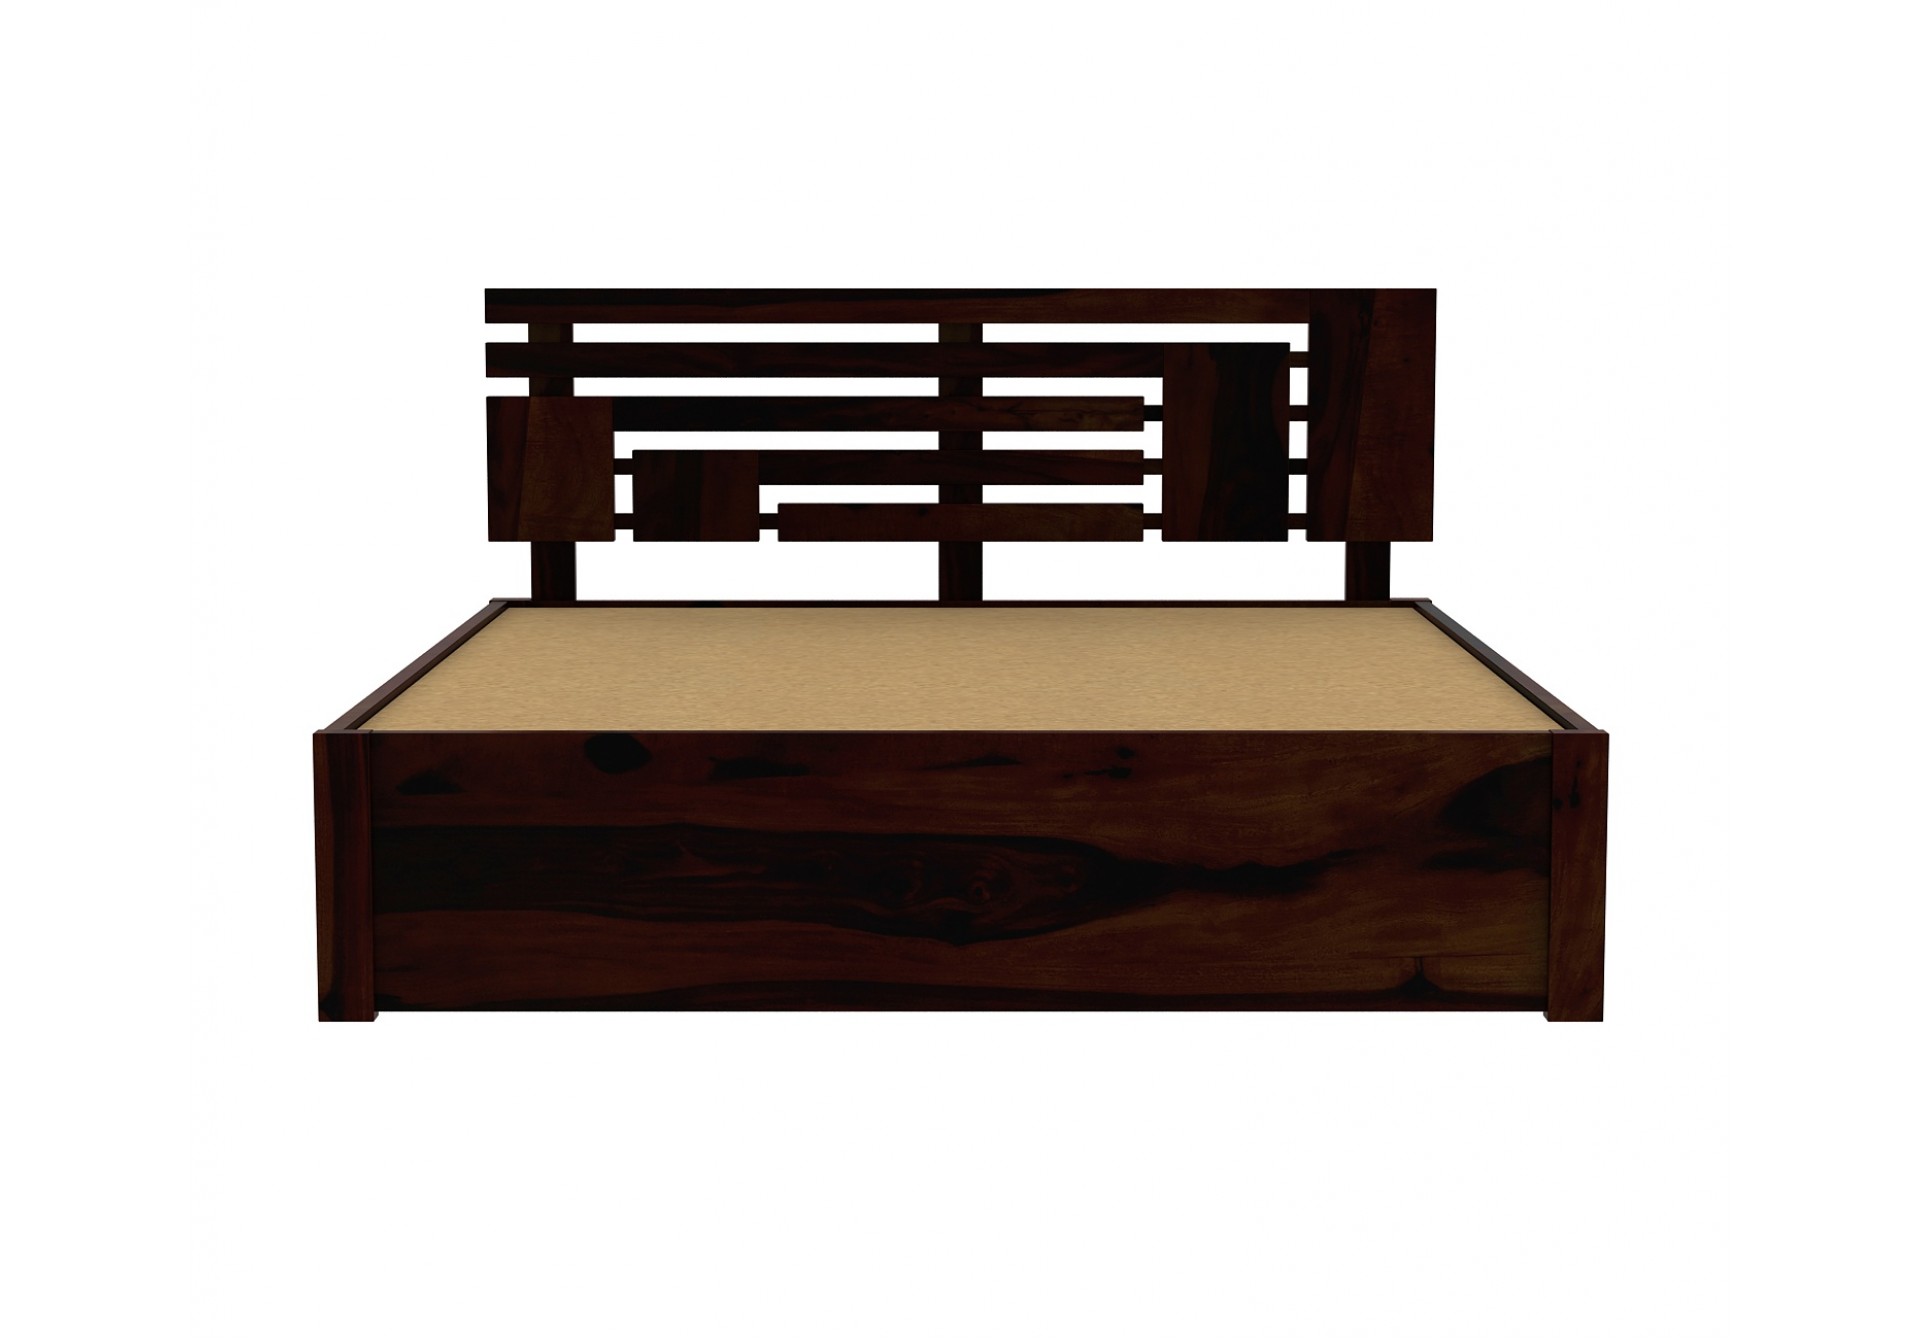 Berlin Wooden Hydraulic Bed  (King Size, Walnut Finish)